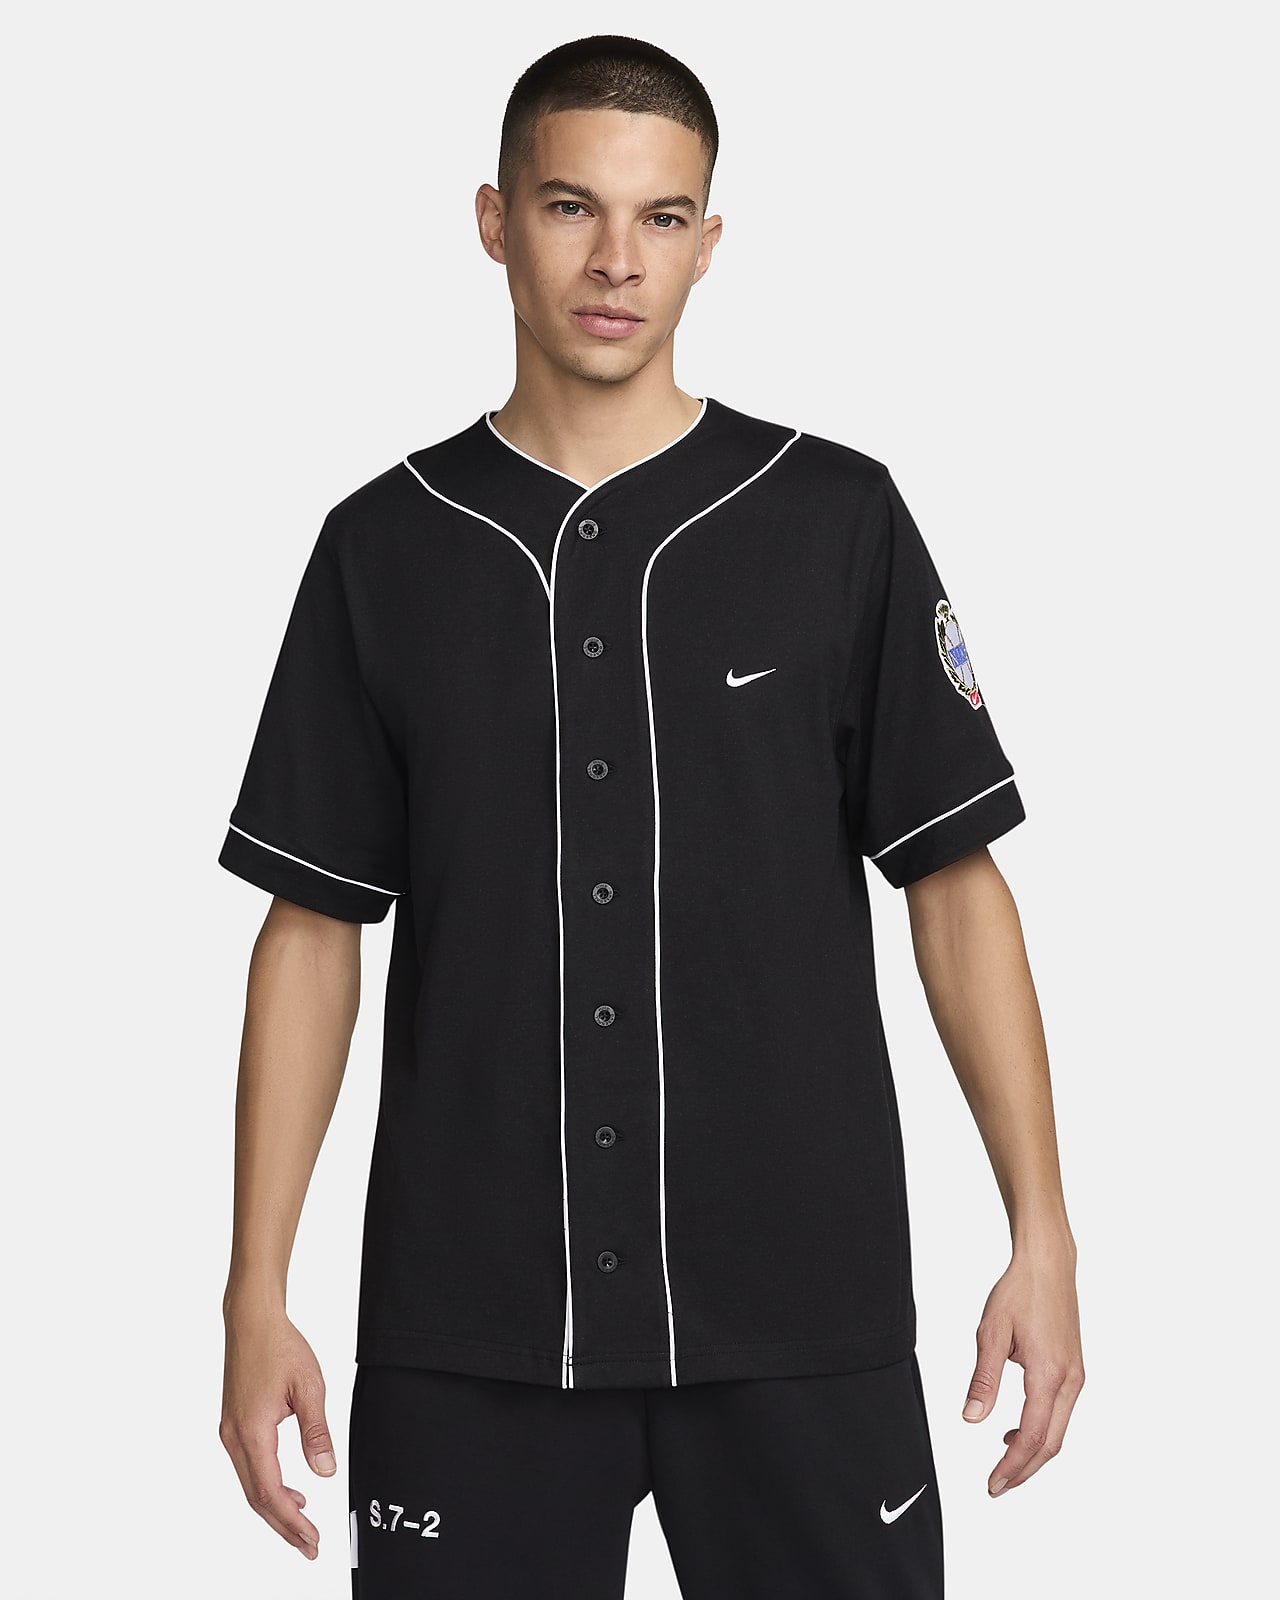 Nike Men's Baseball Jersey